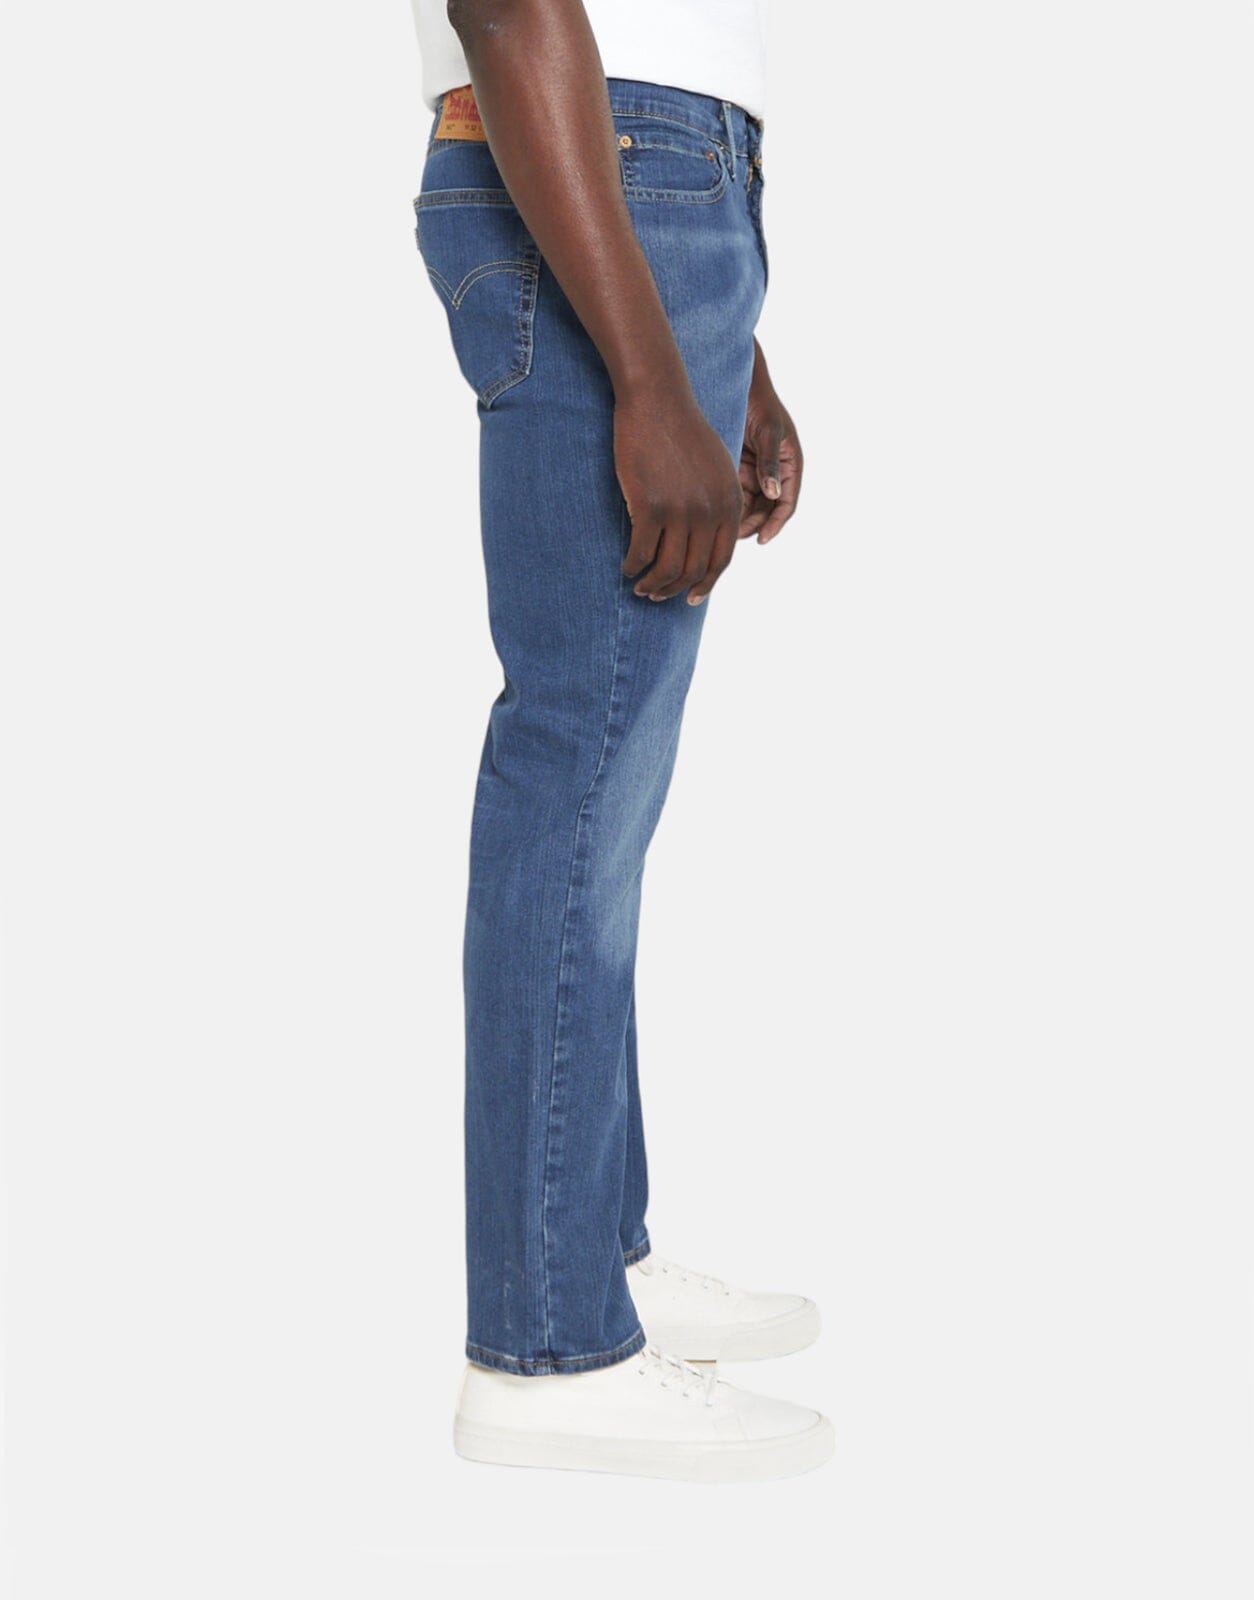 Levi's 541 Athletic Taper Fremont Jeans - Subwear